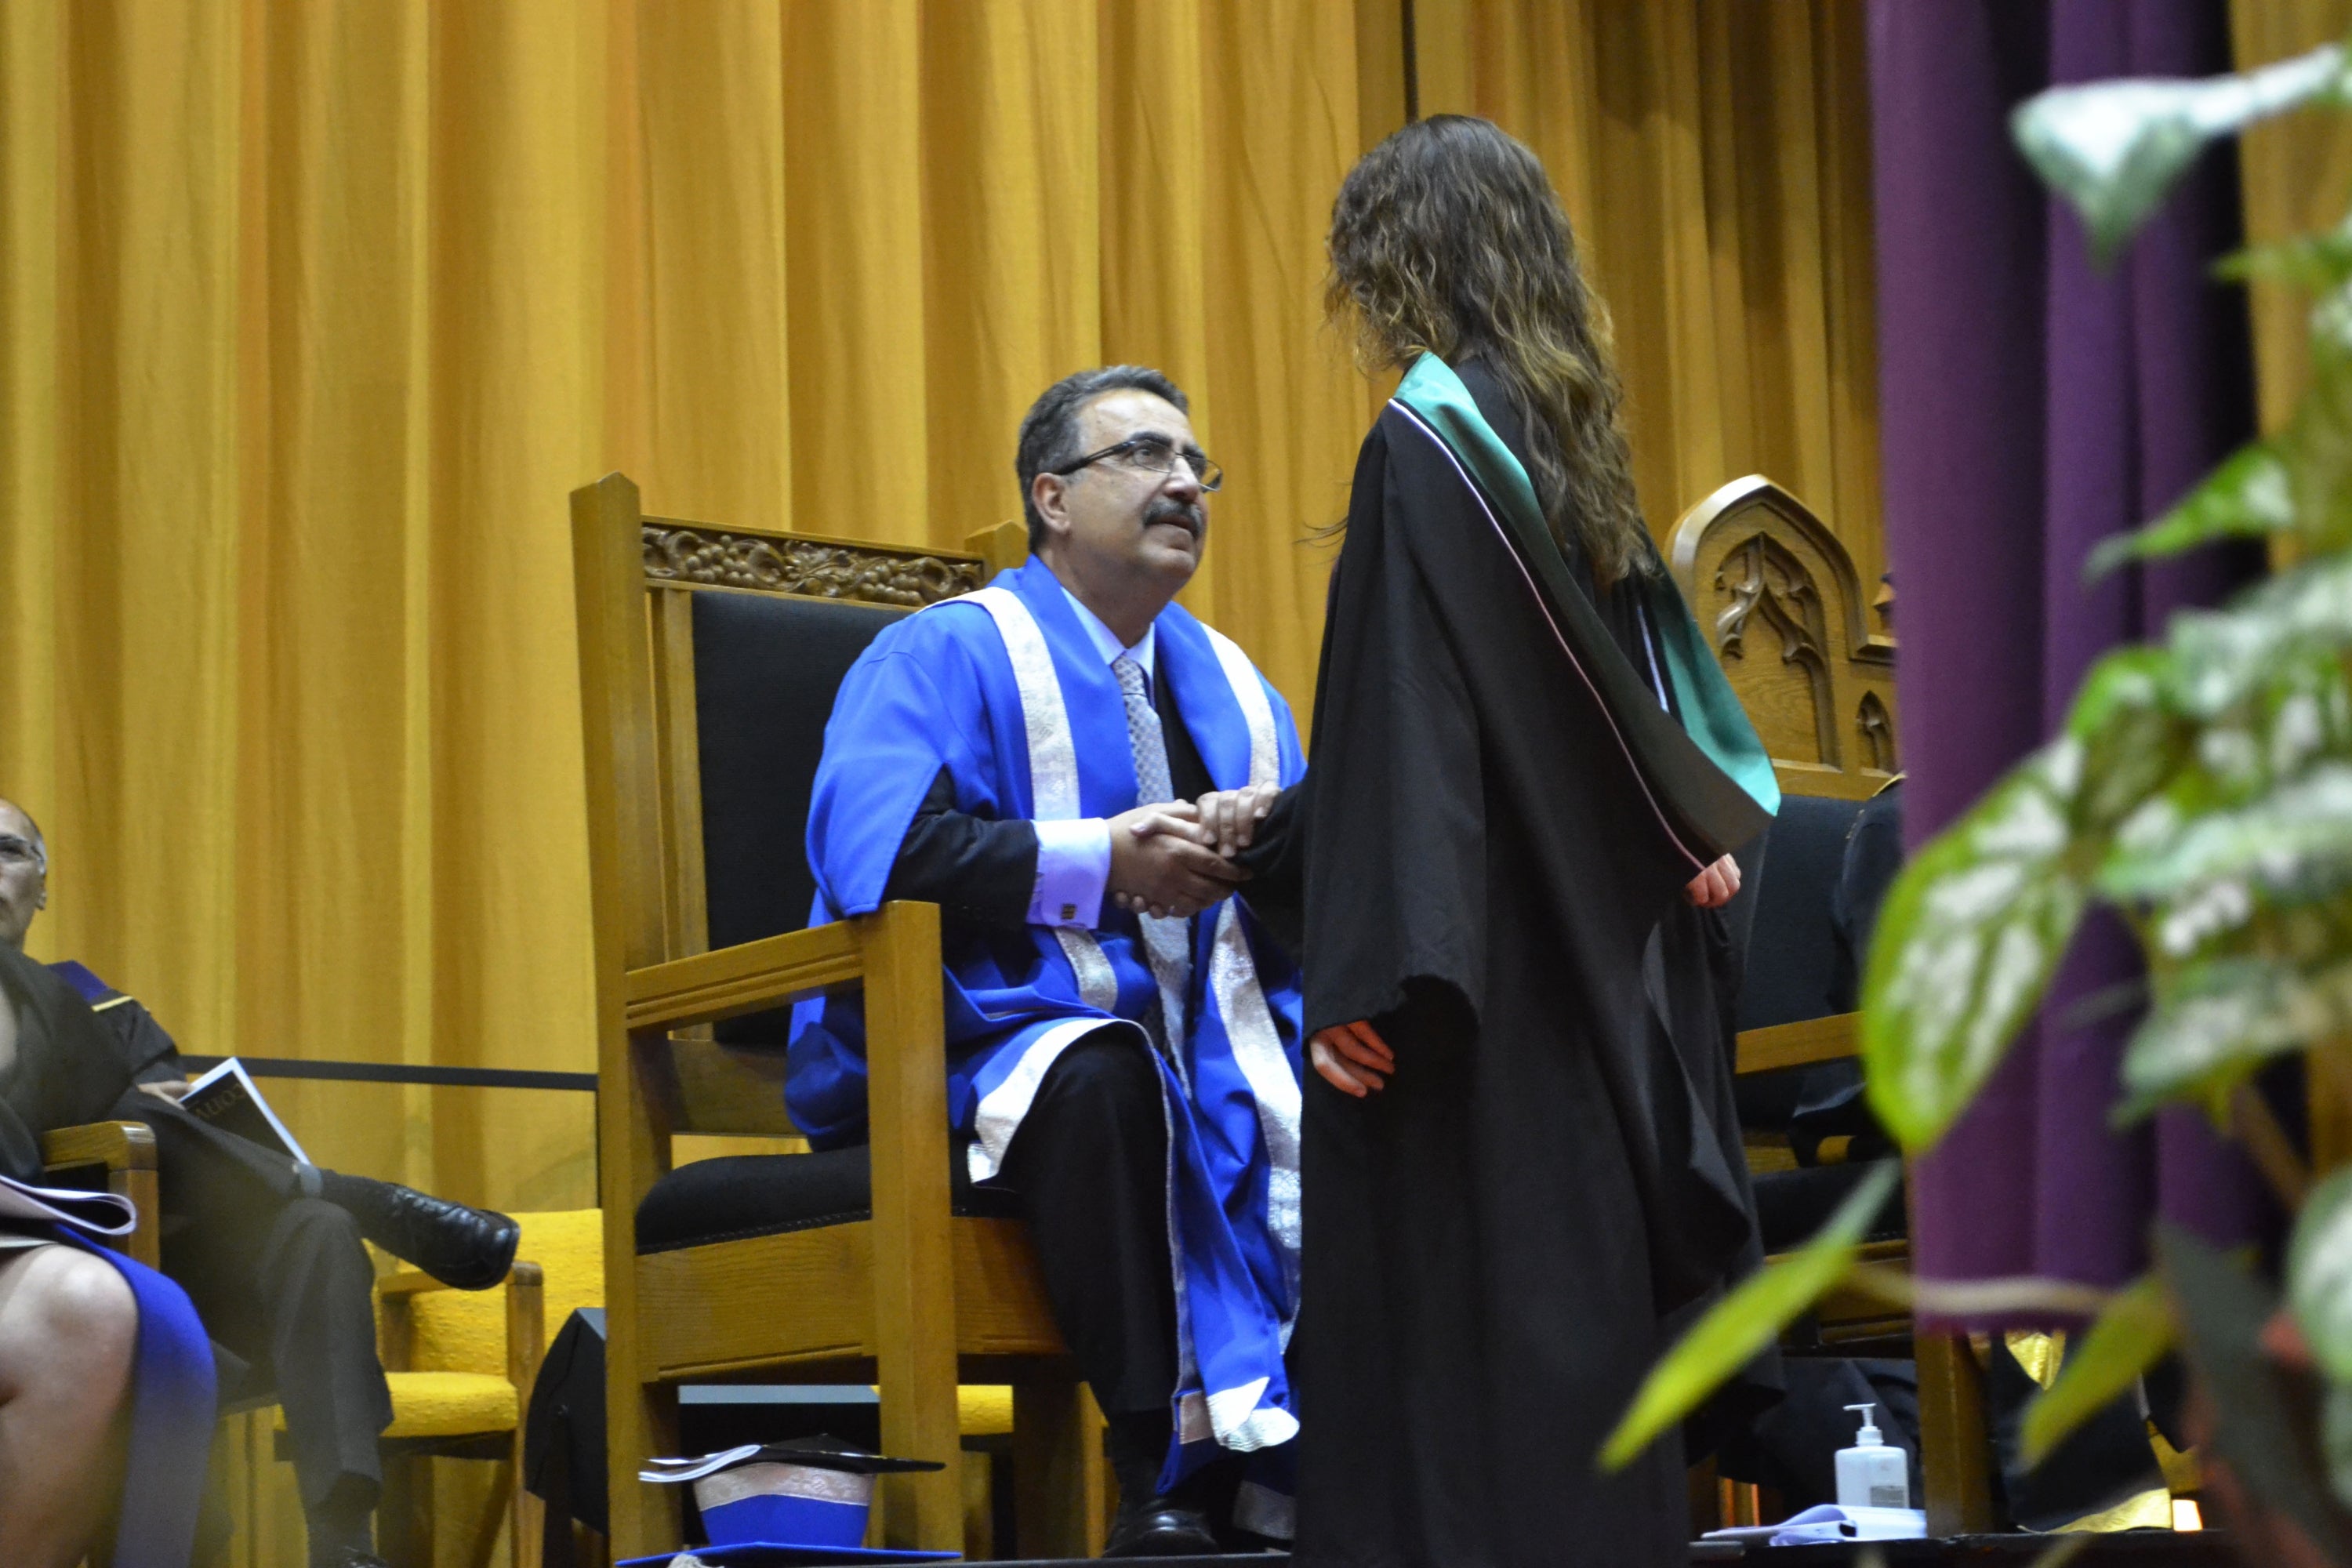 President Hamdullahpur congratulates a graduand at Convocation.